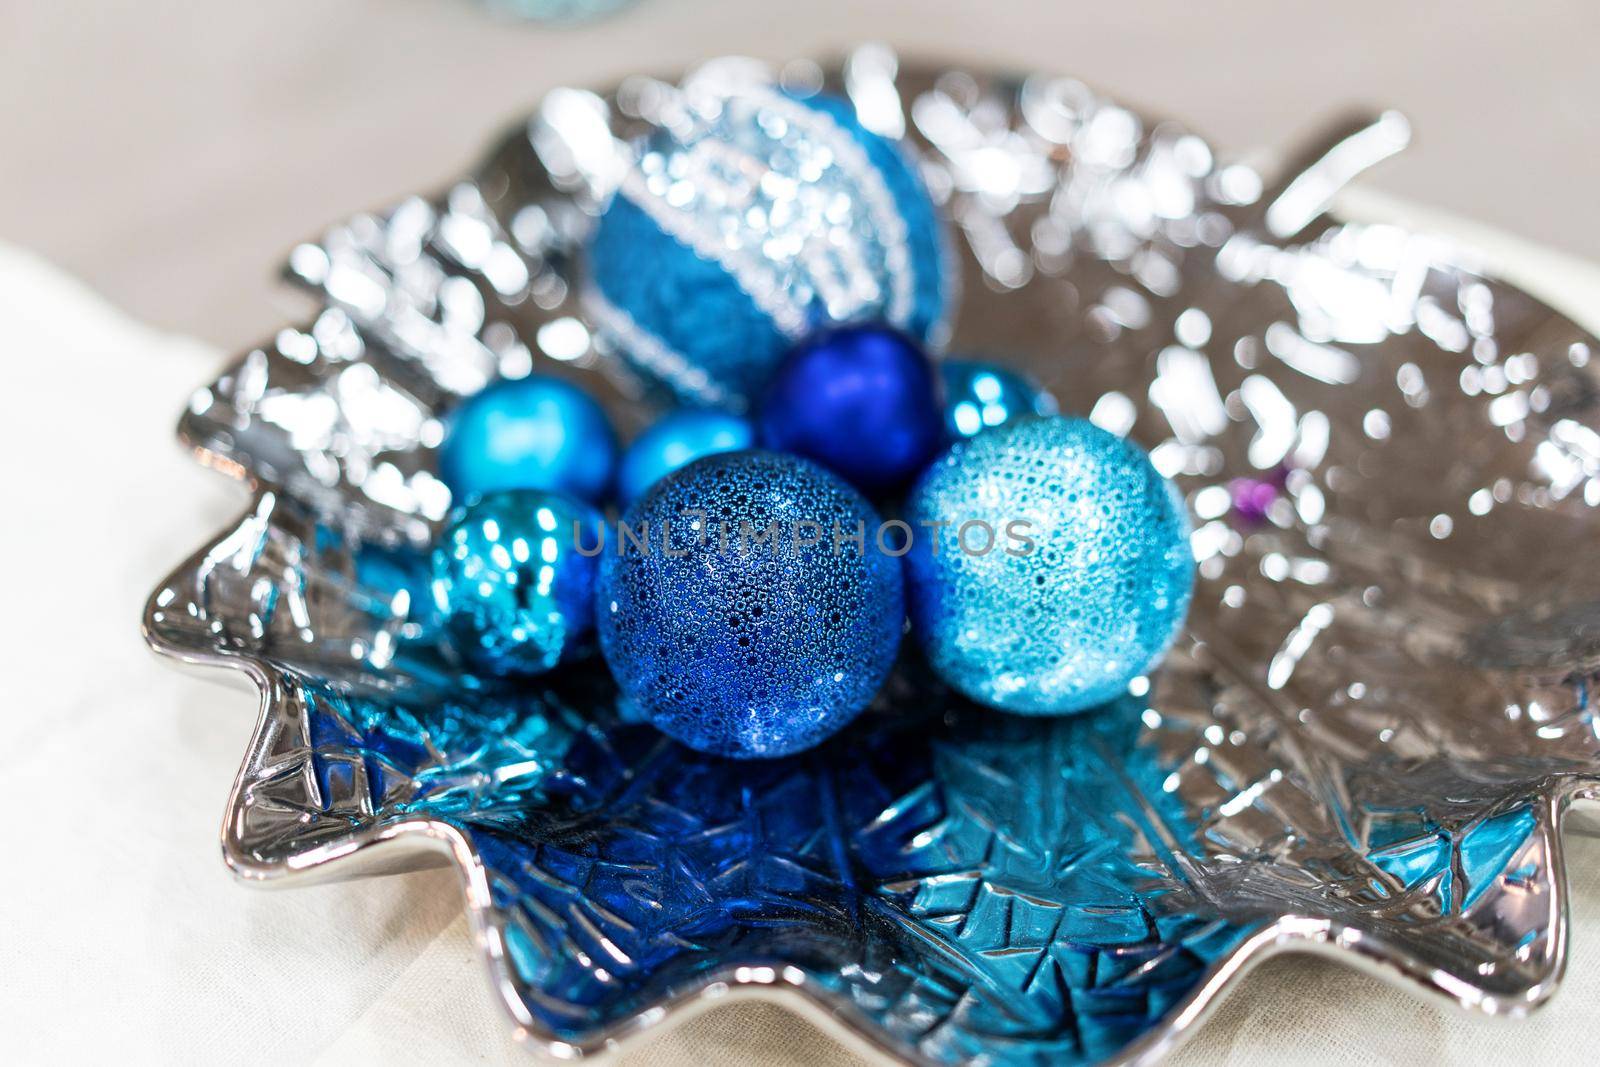 Shining Blue Christmas Decorations on Silver Plate. New Year Inspiration Still Life. Beautiful still life with round blue Christmas decorations. Close up shot by LipikStockMedia